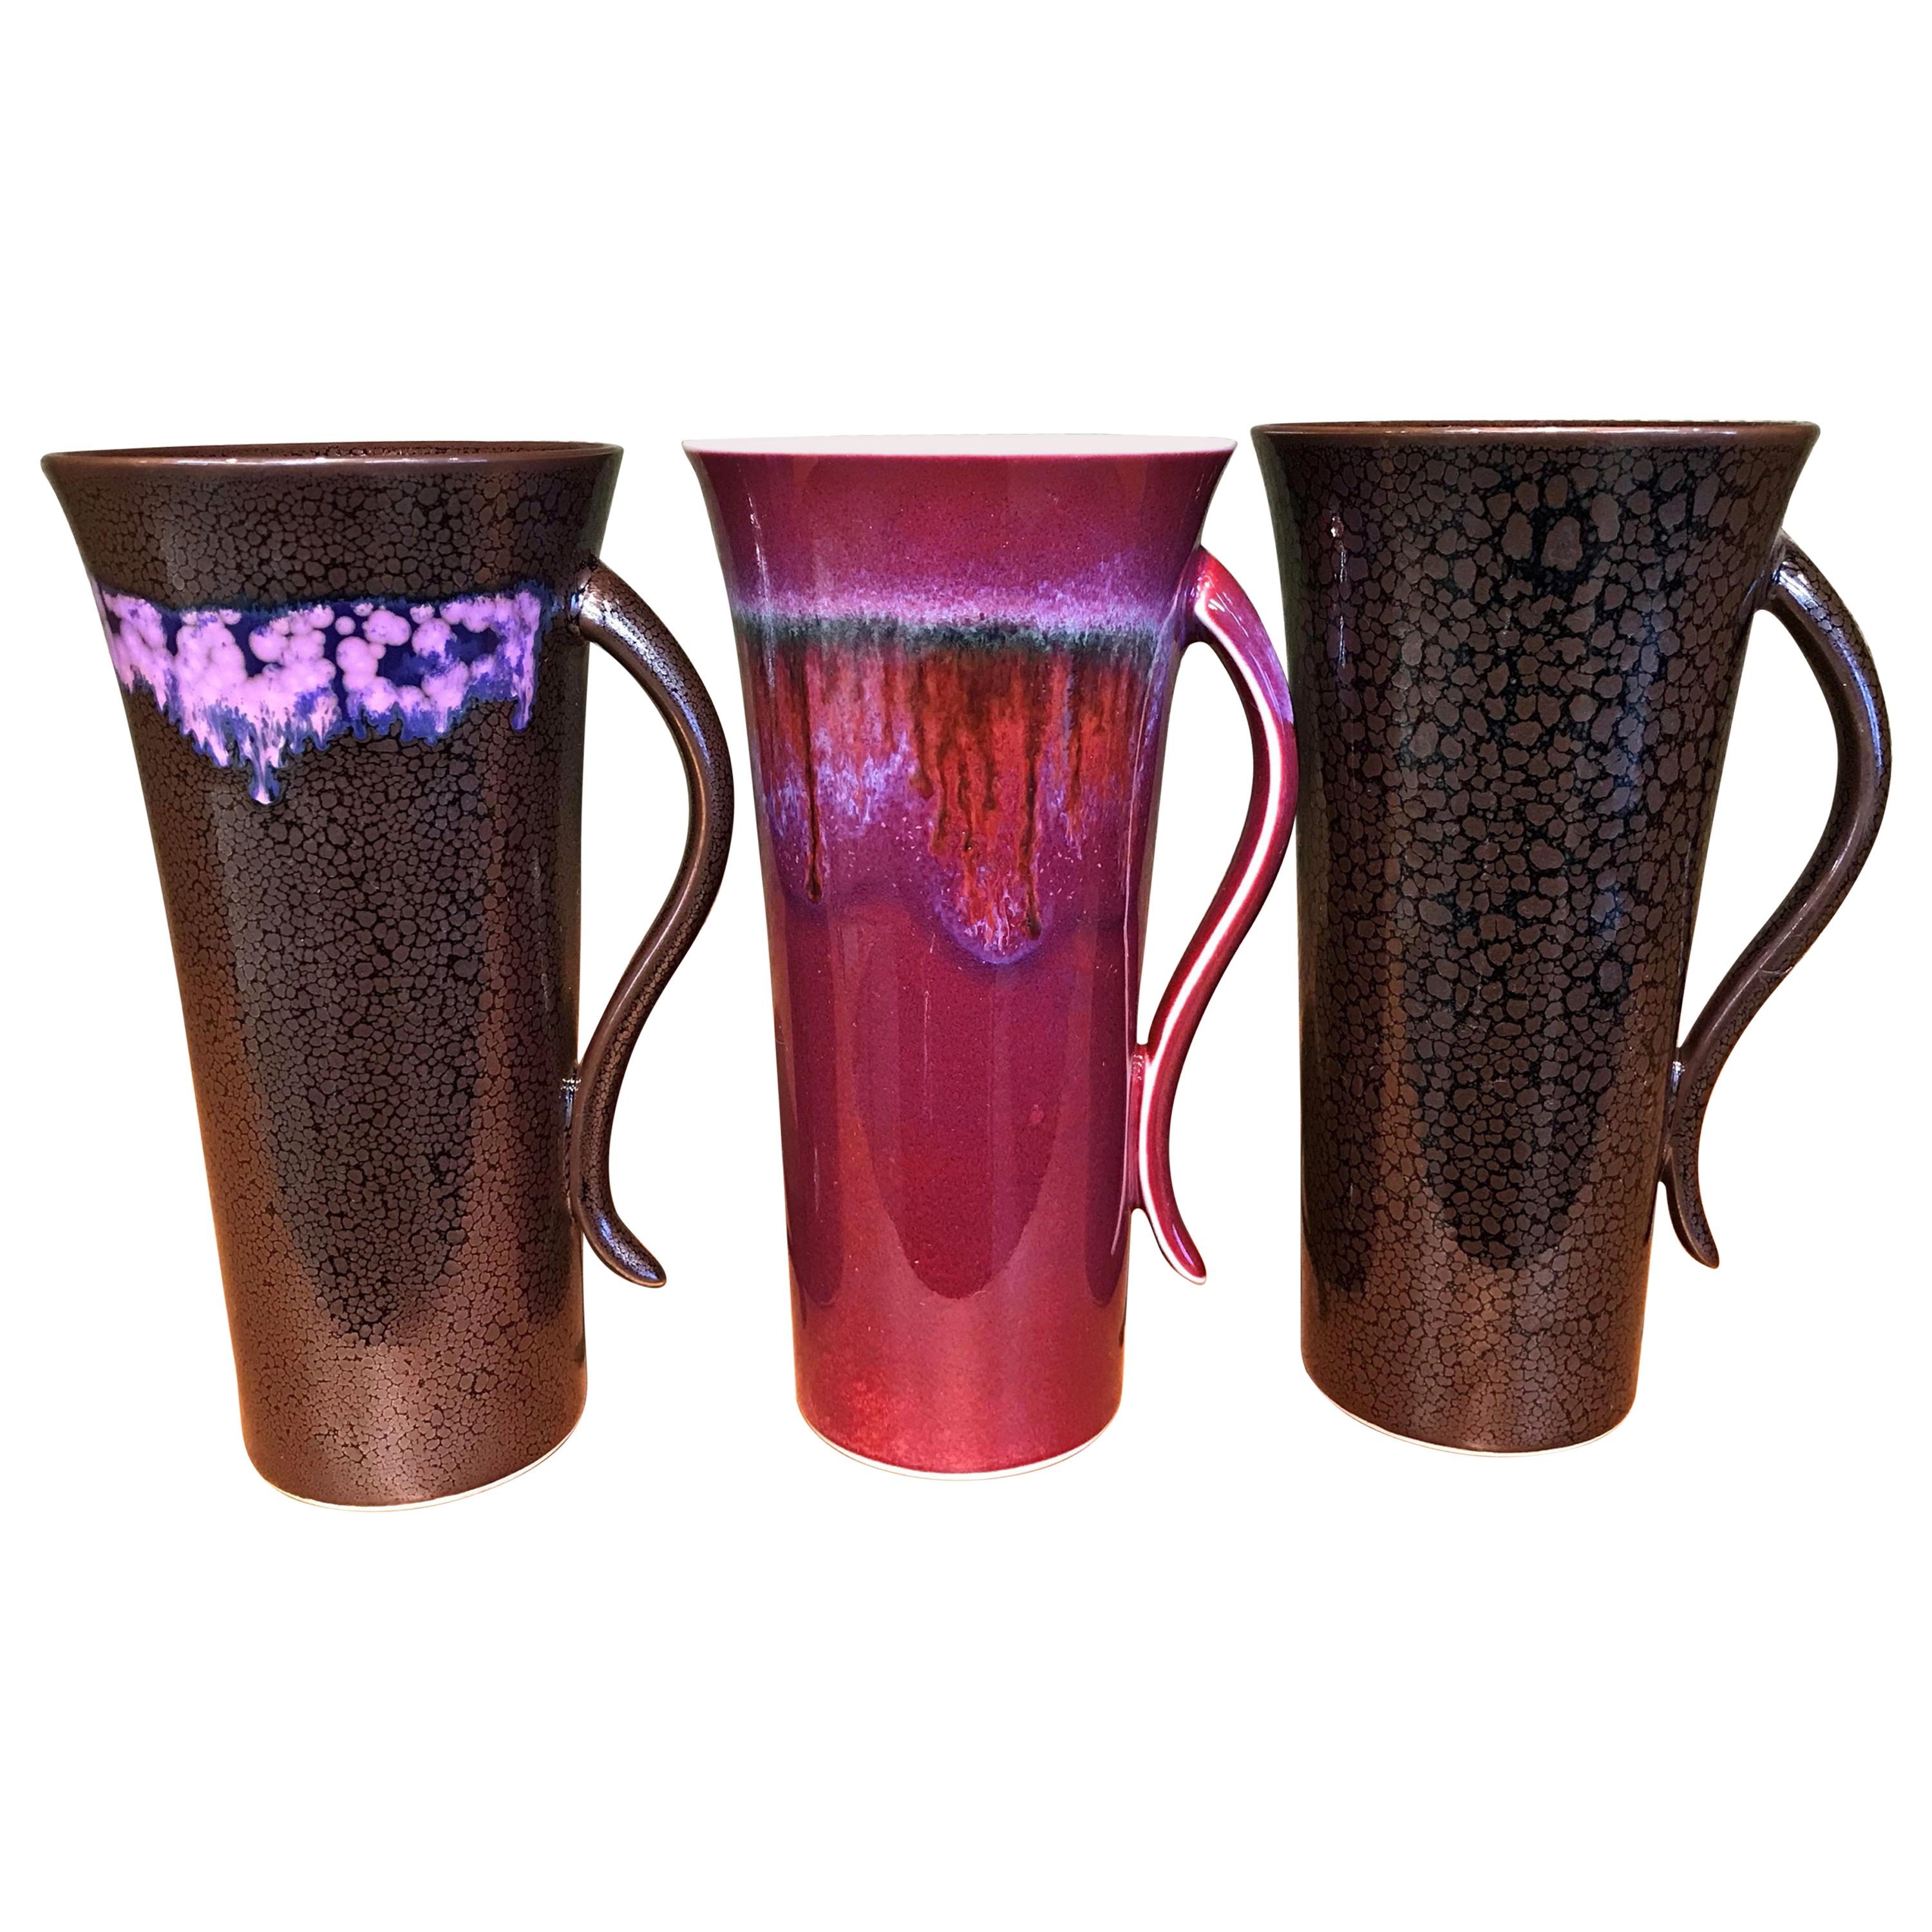 Set of Japanese Contemporary Hand-Glazed Porcelain Mug Cups by Master Artist